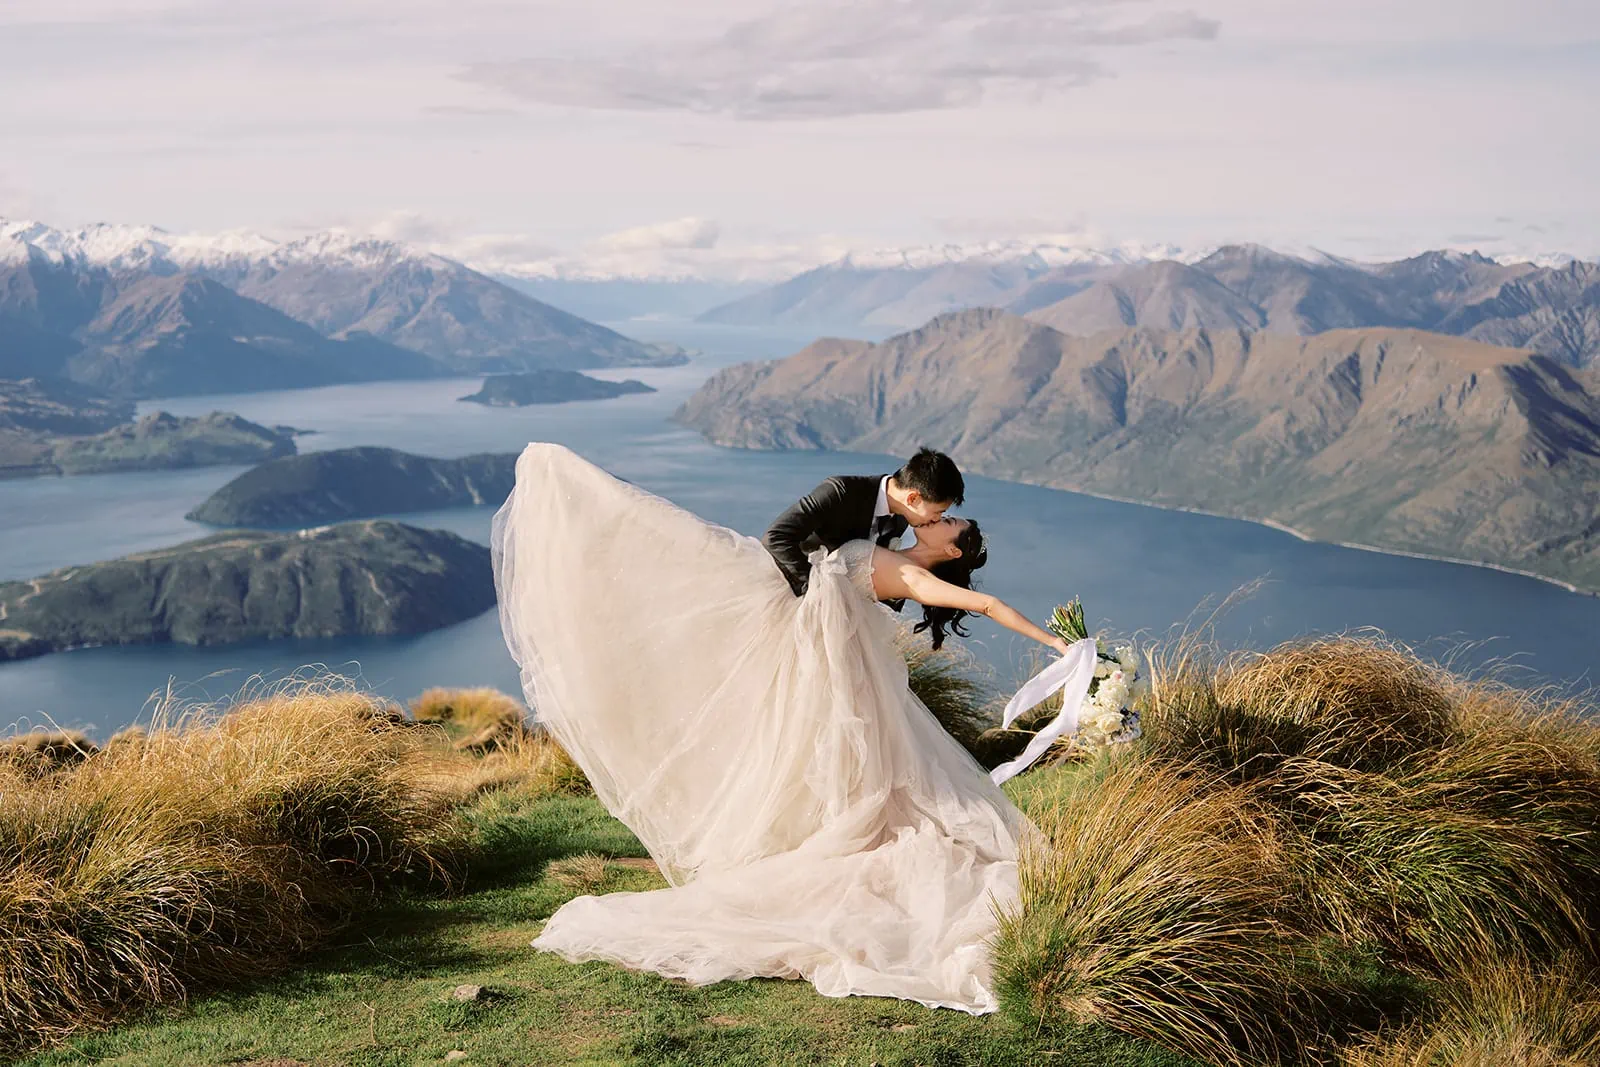 Eusanna & Otto | Coromandel Peak Pre-Wedding Shoot